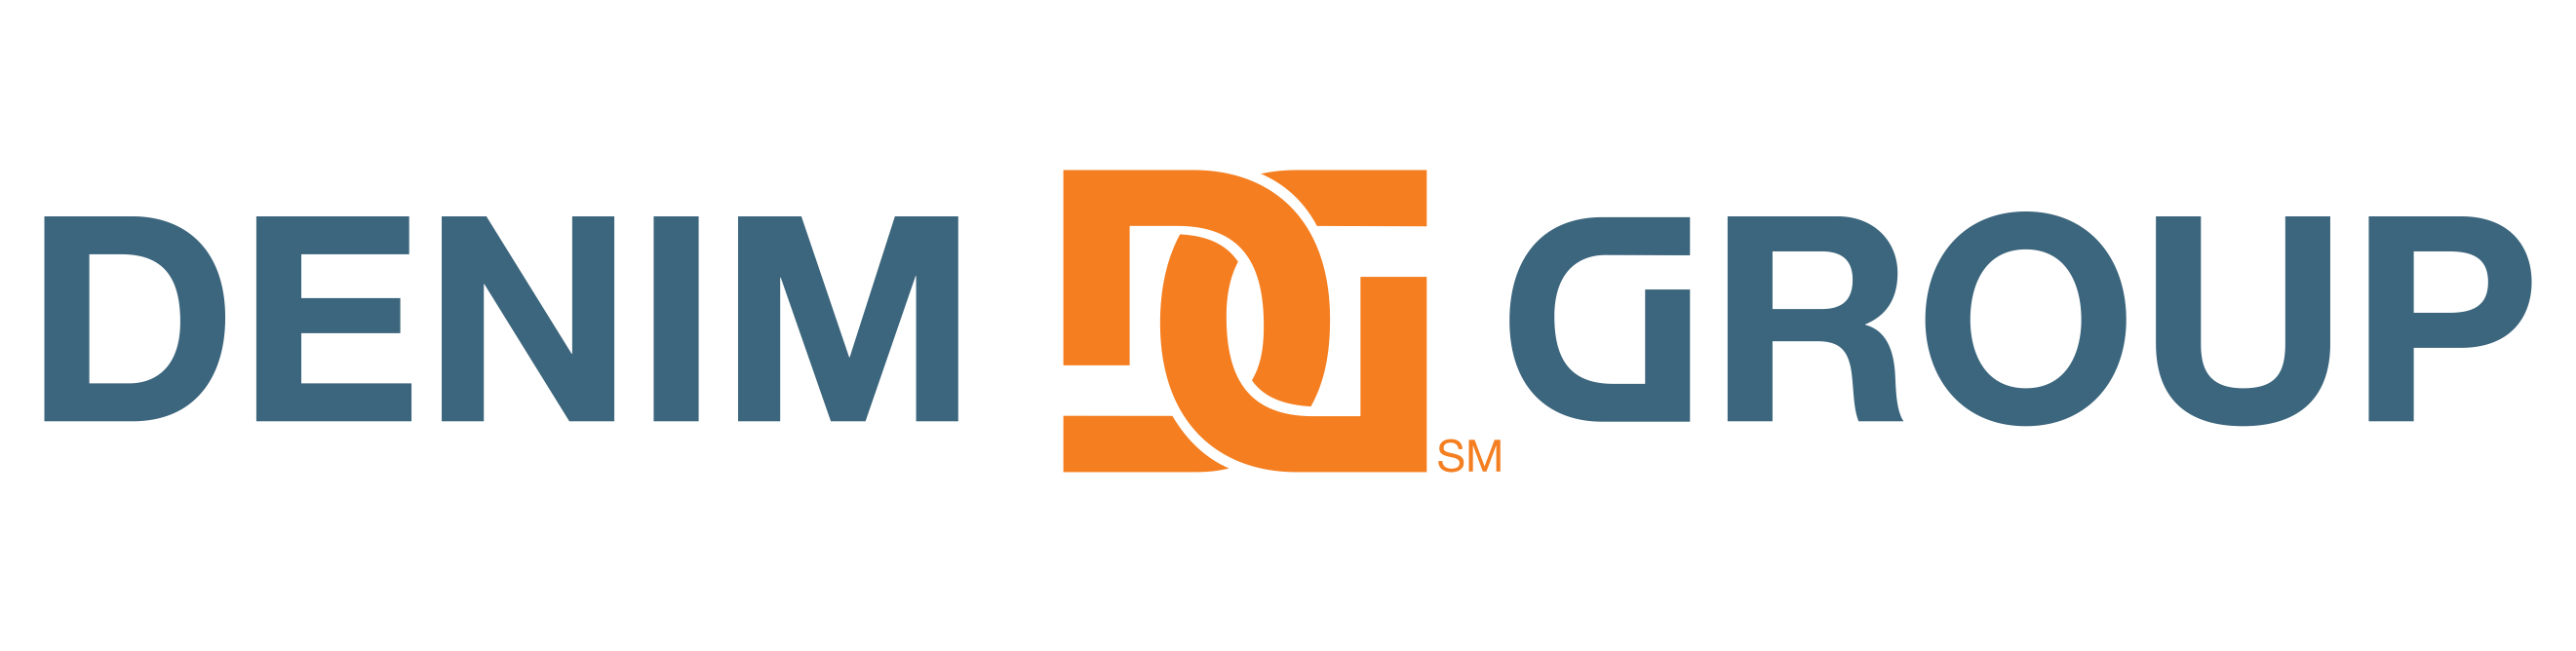 Denim Group Company Logo